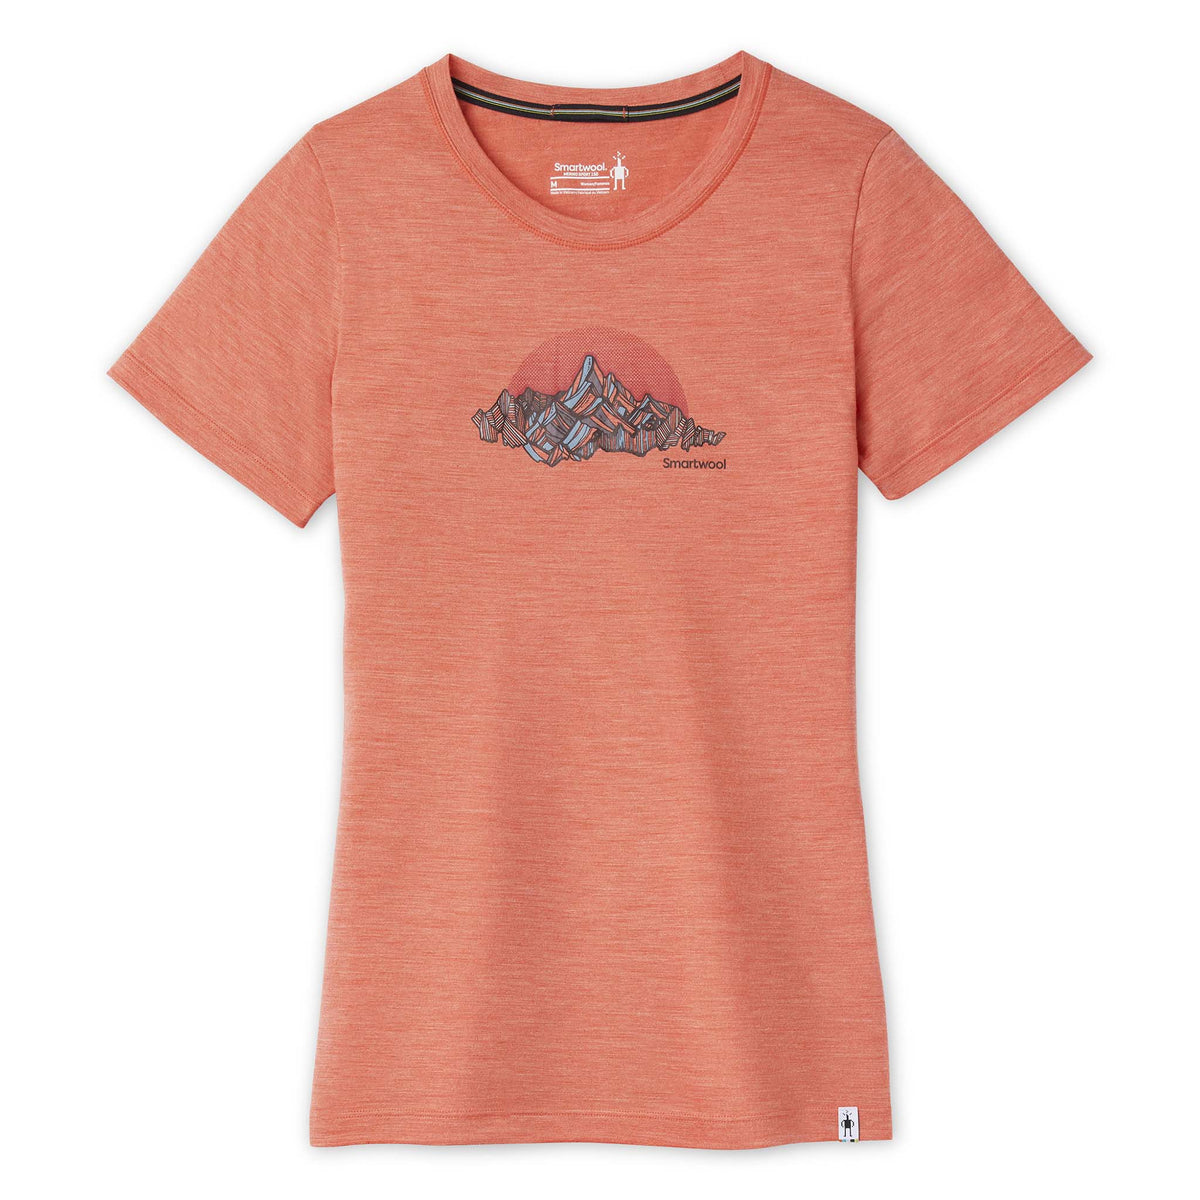 Smartwool Merino Sport 150 Mt. Rainier Graphic t-shirt sunset coral heather femme